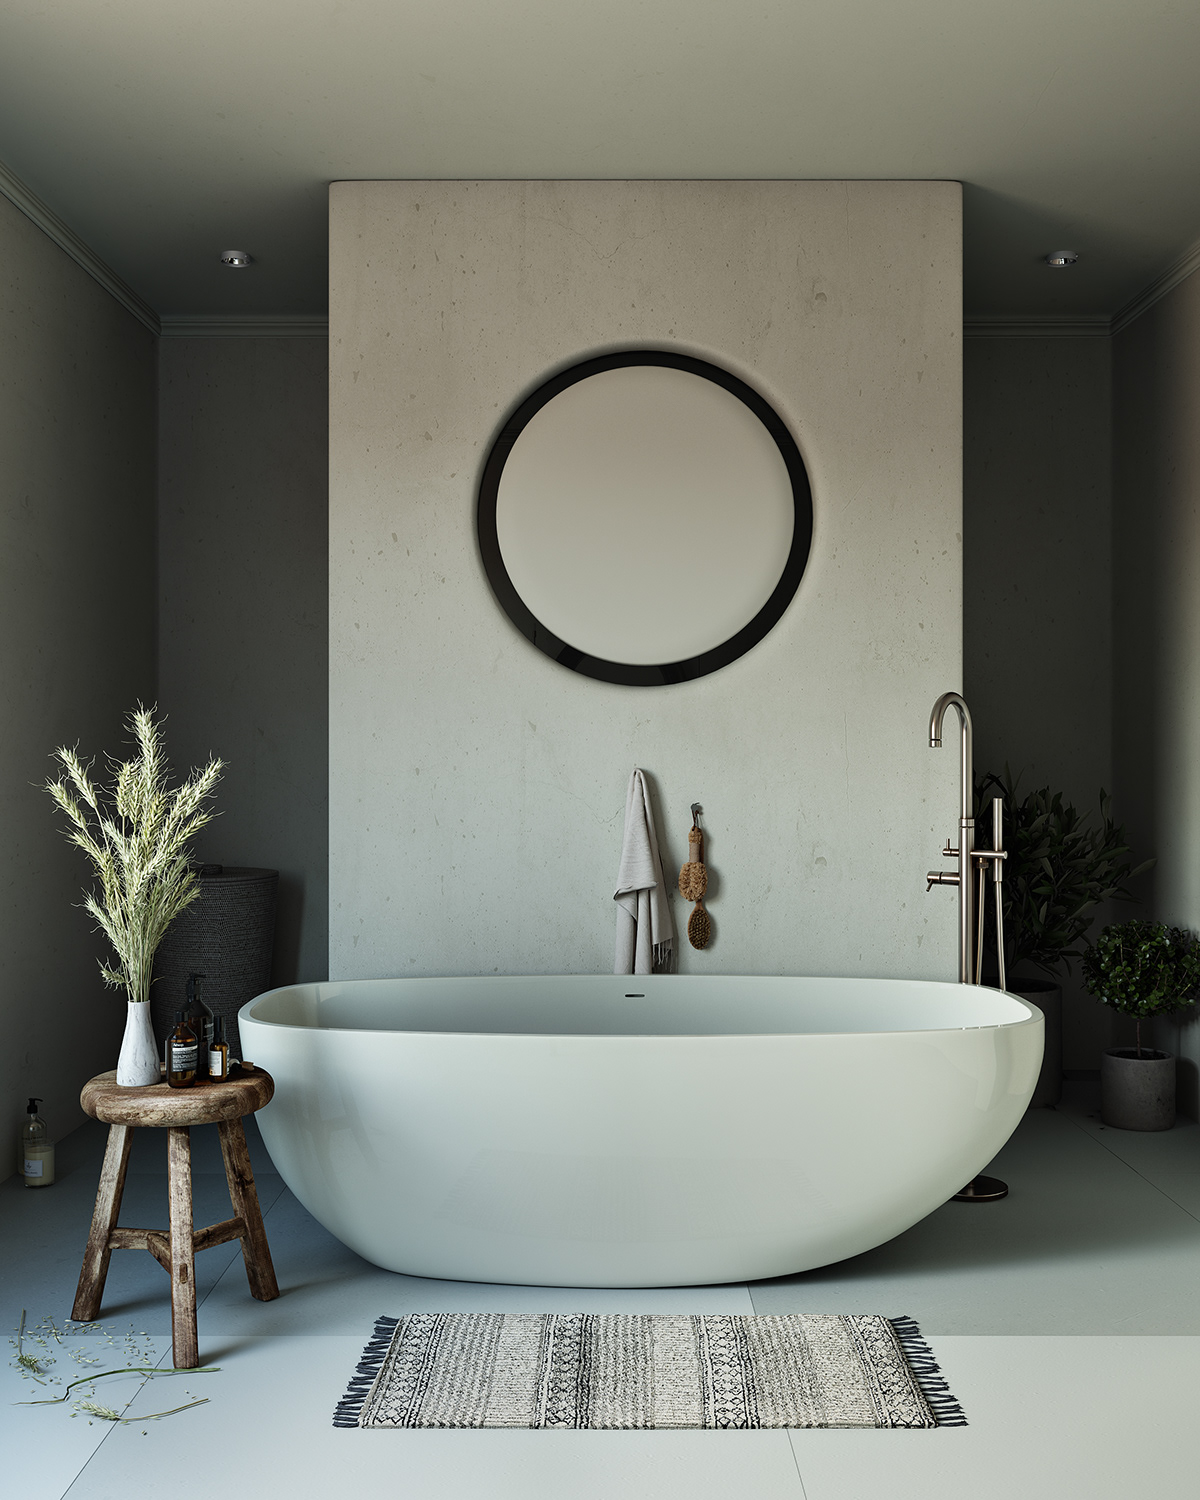 3dsmax Bath. Behance Interior photoshop vray visualization